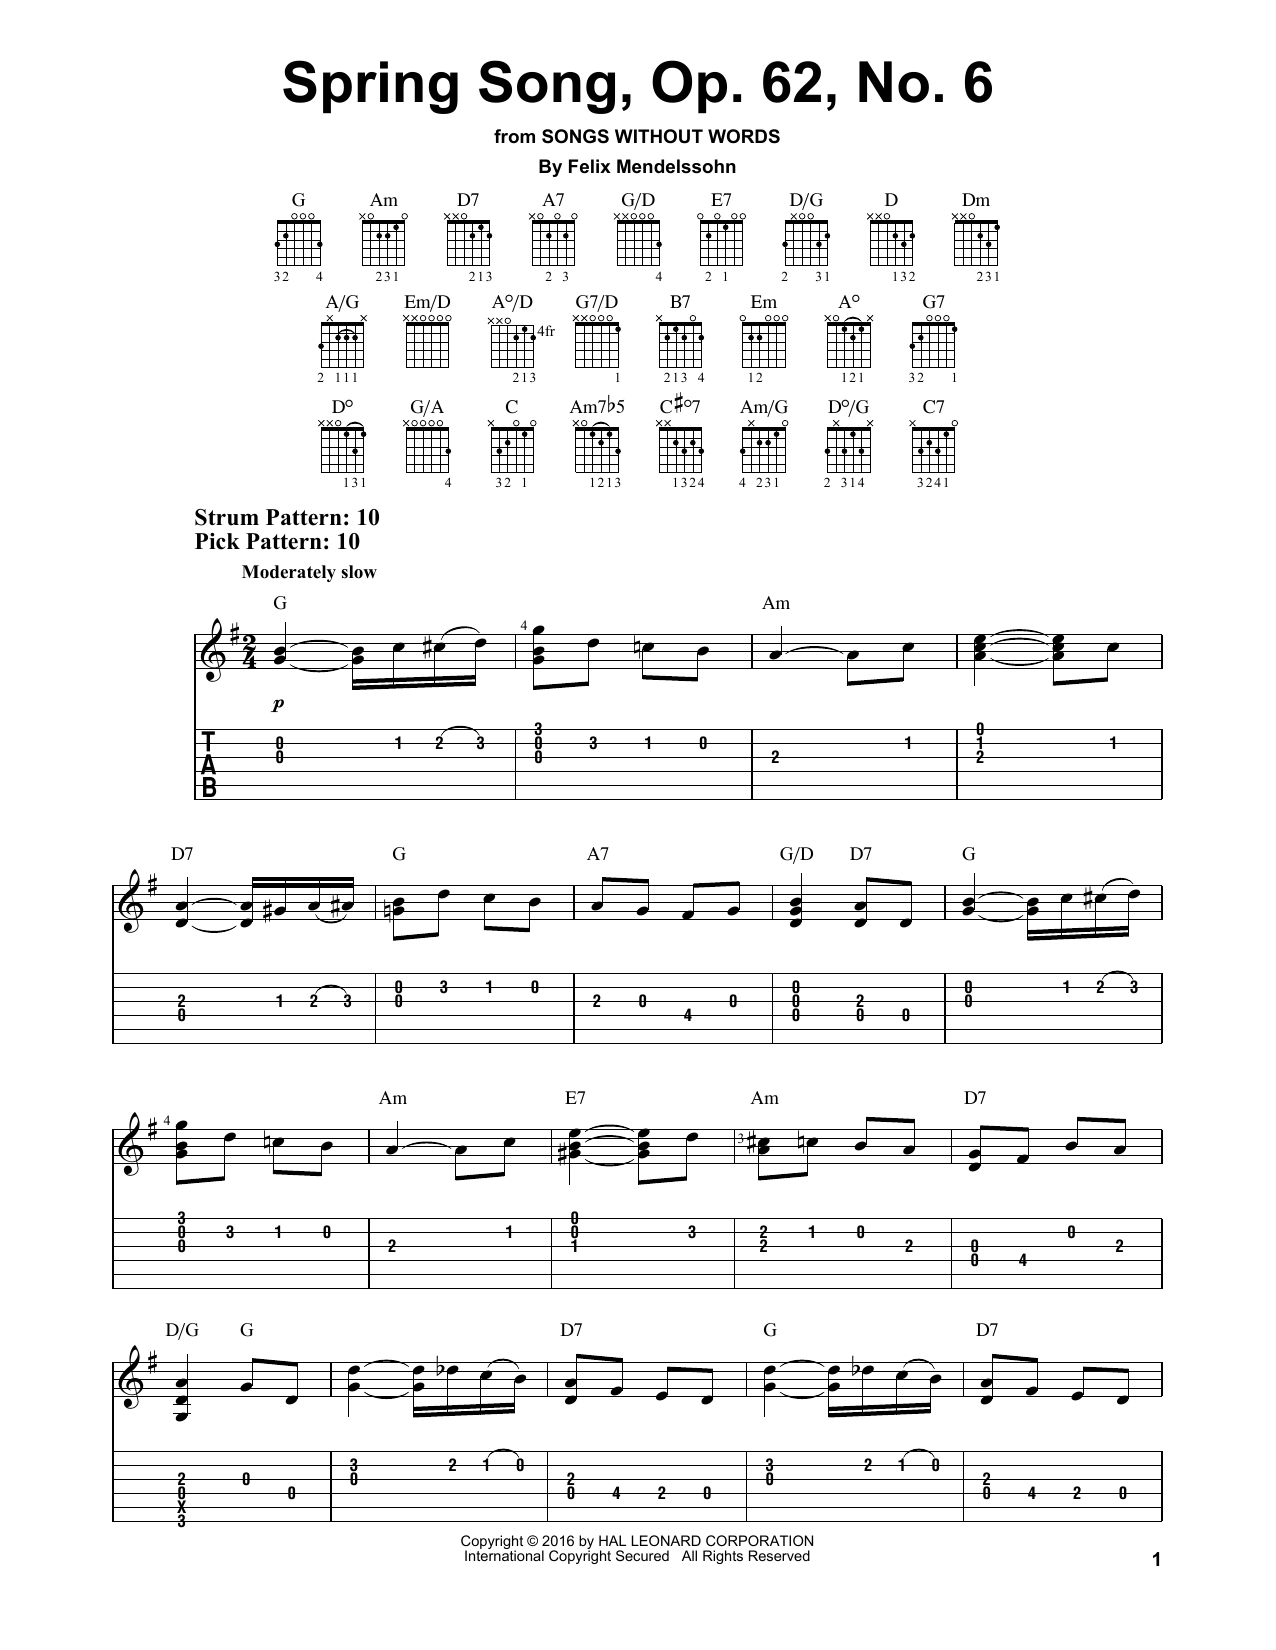 Felix Mendelssohn Spring Song, Op. 62, No. 6 Sheet Music Notes & Chords for Easy Guitar Tab - Download or Print PDF